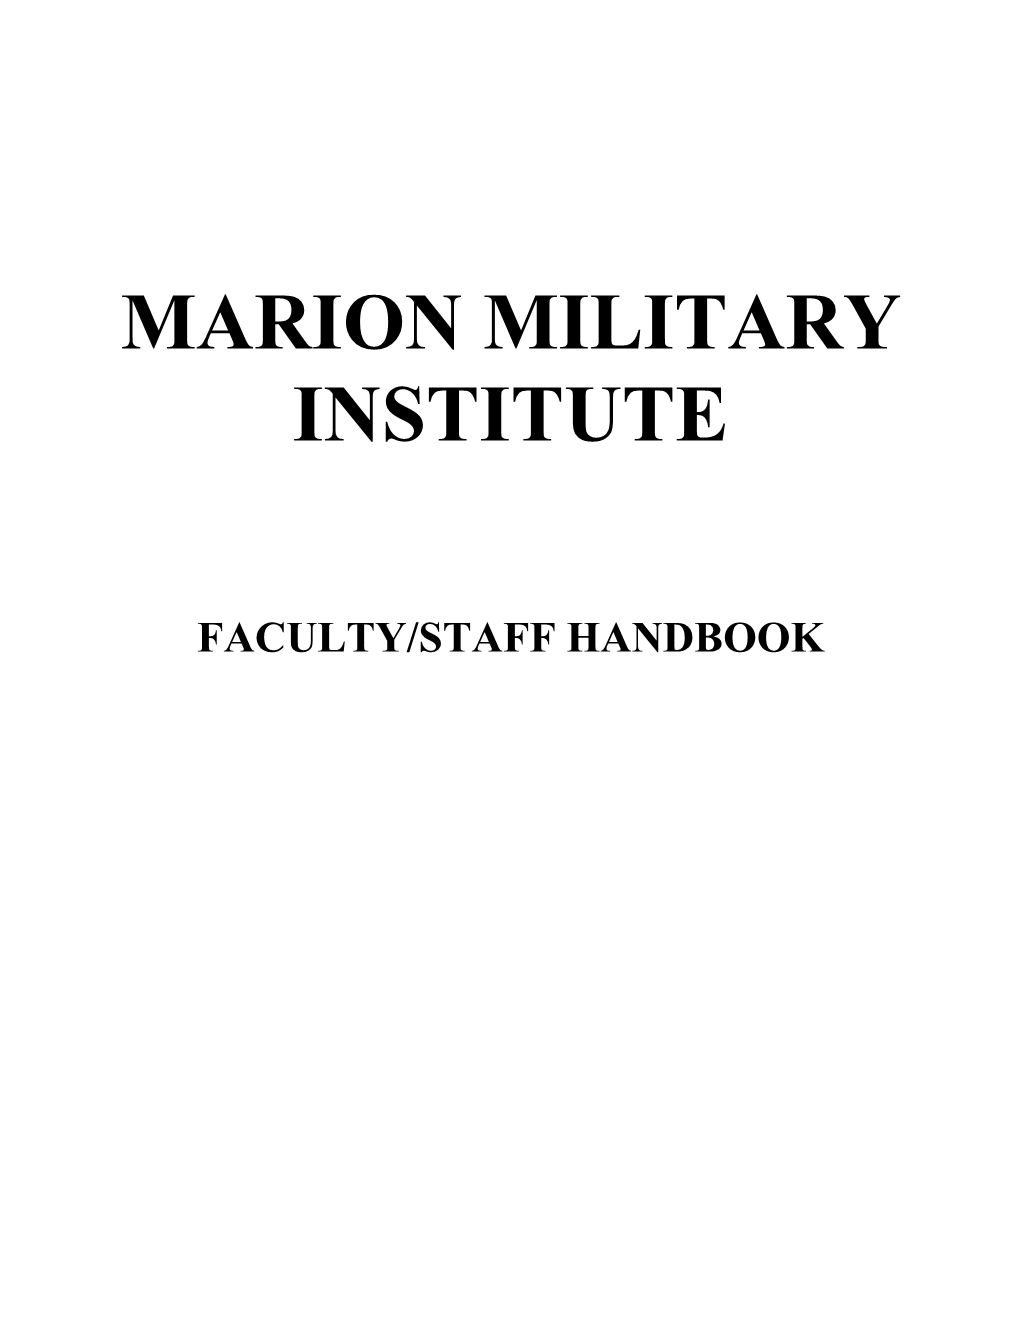 Faculty / Staff Handbook